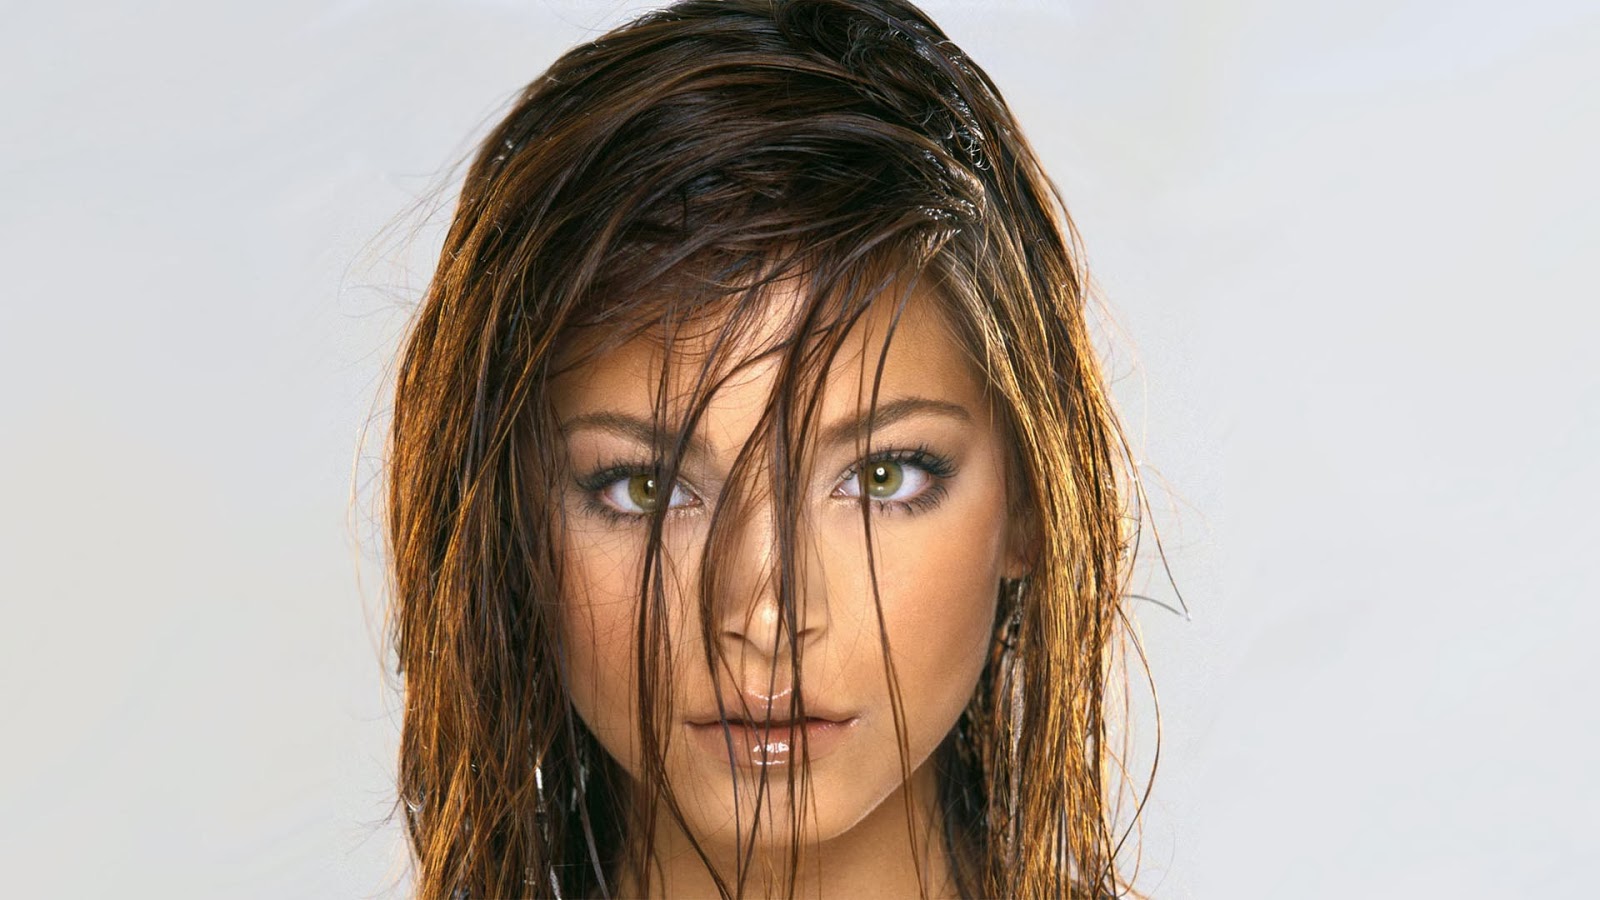 Kristen Kreuk Hair Wet Full HD Desktop Wallpaper 1080p